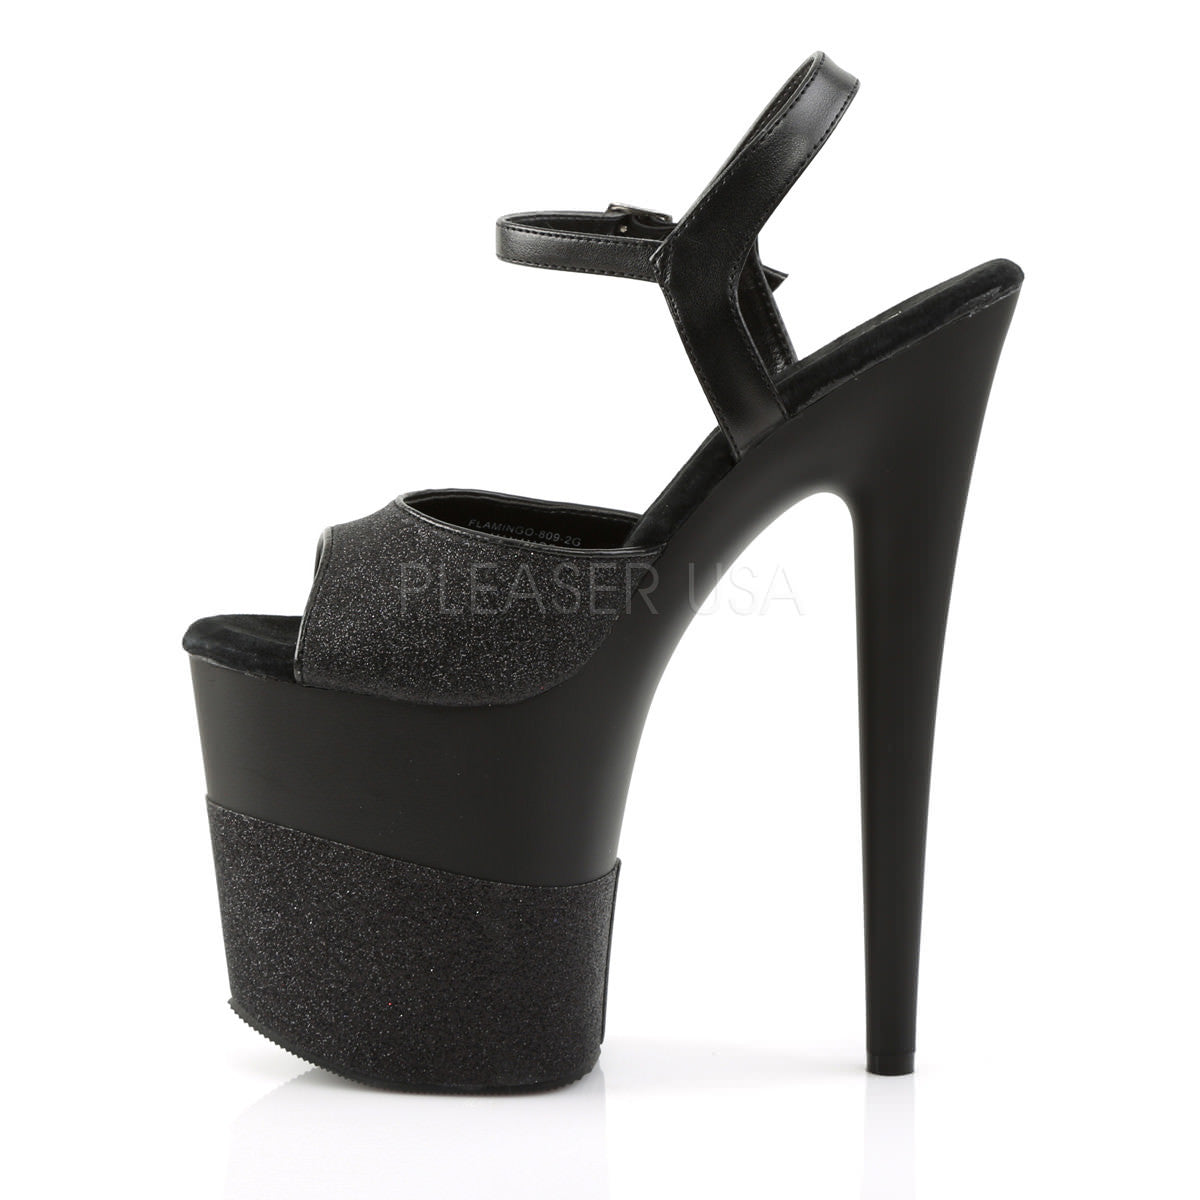 PLEASER FLAMINGO-809-2G Black Glitter-Black-Glitter Ankle Strap Sandals - Shoecup.com - 3